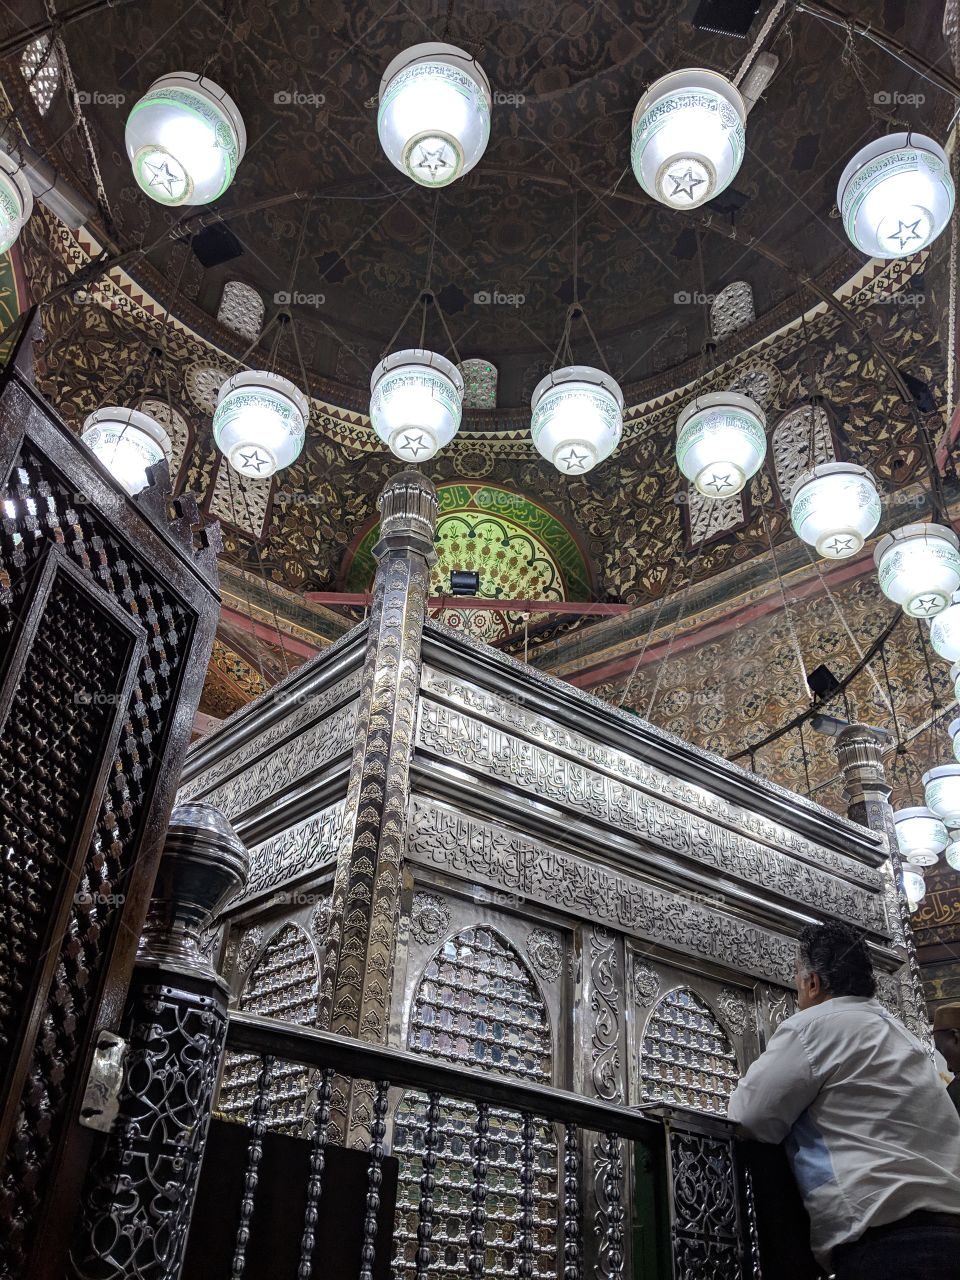 Inside the Al-Houssein Mosque in Cairo, Egypt near the Khan Khalili Bazaar